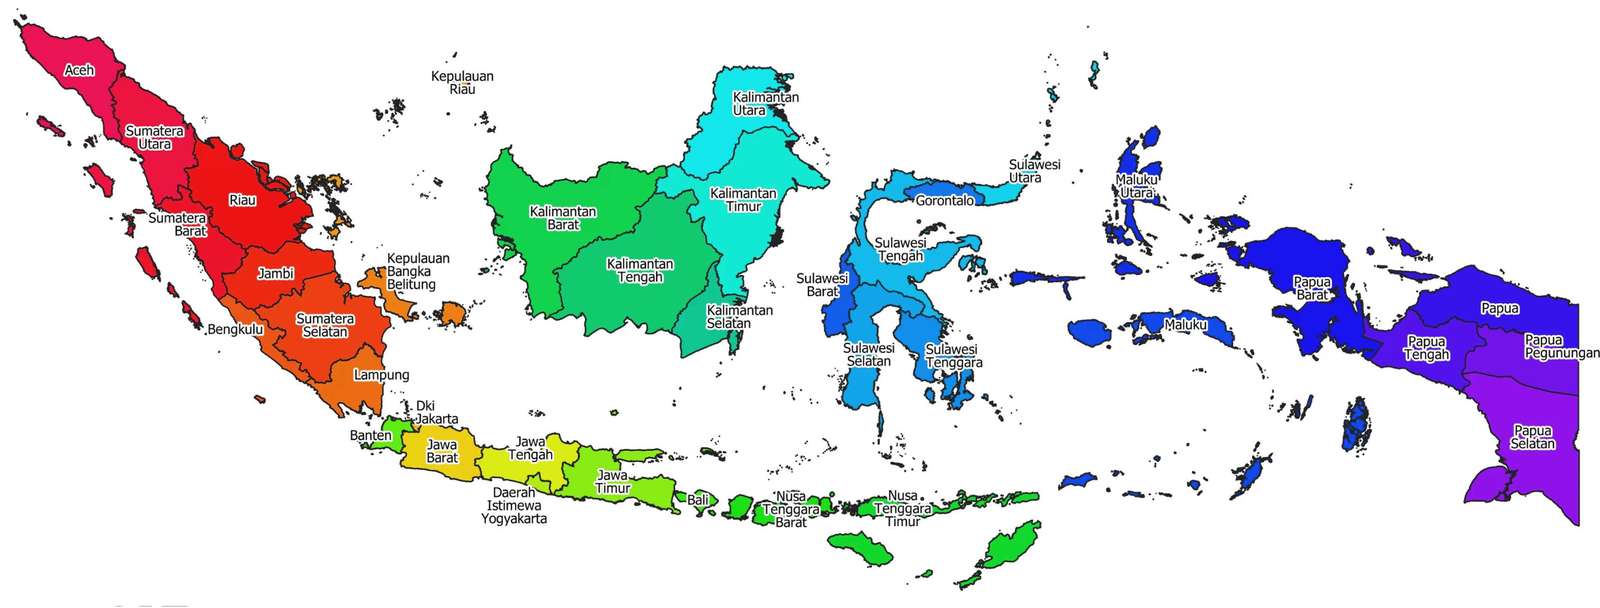 Peta Indonesien Online-Puzzle